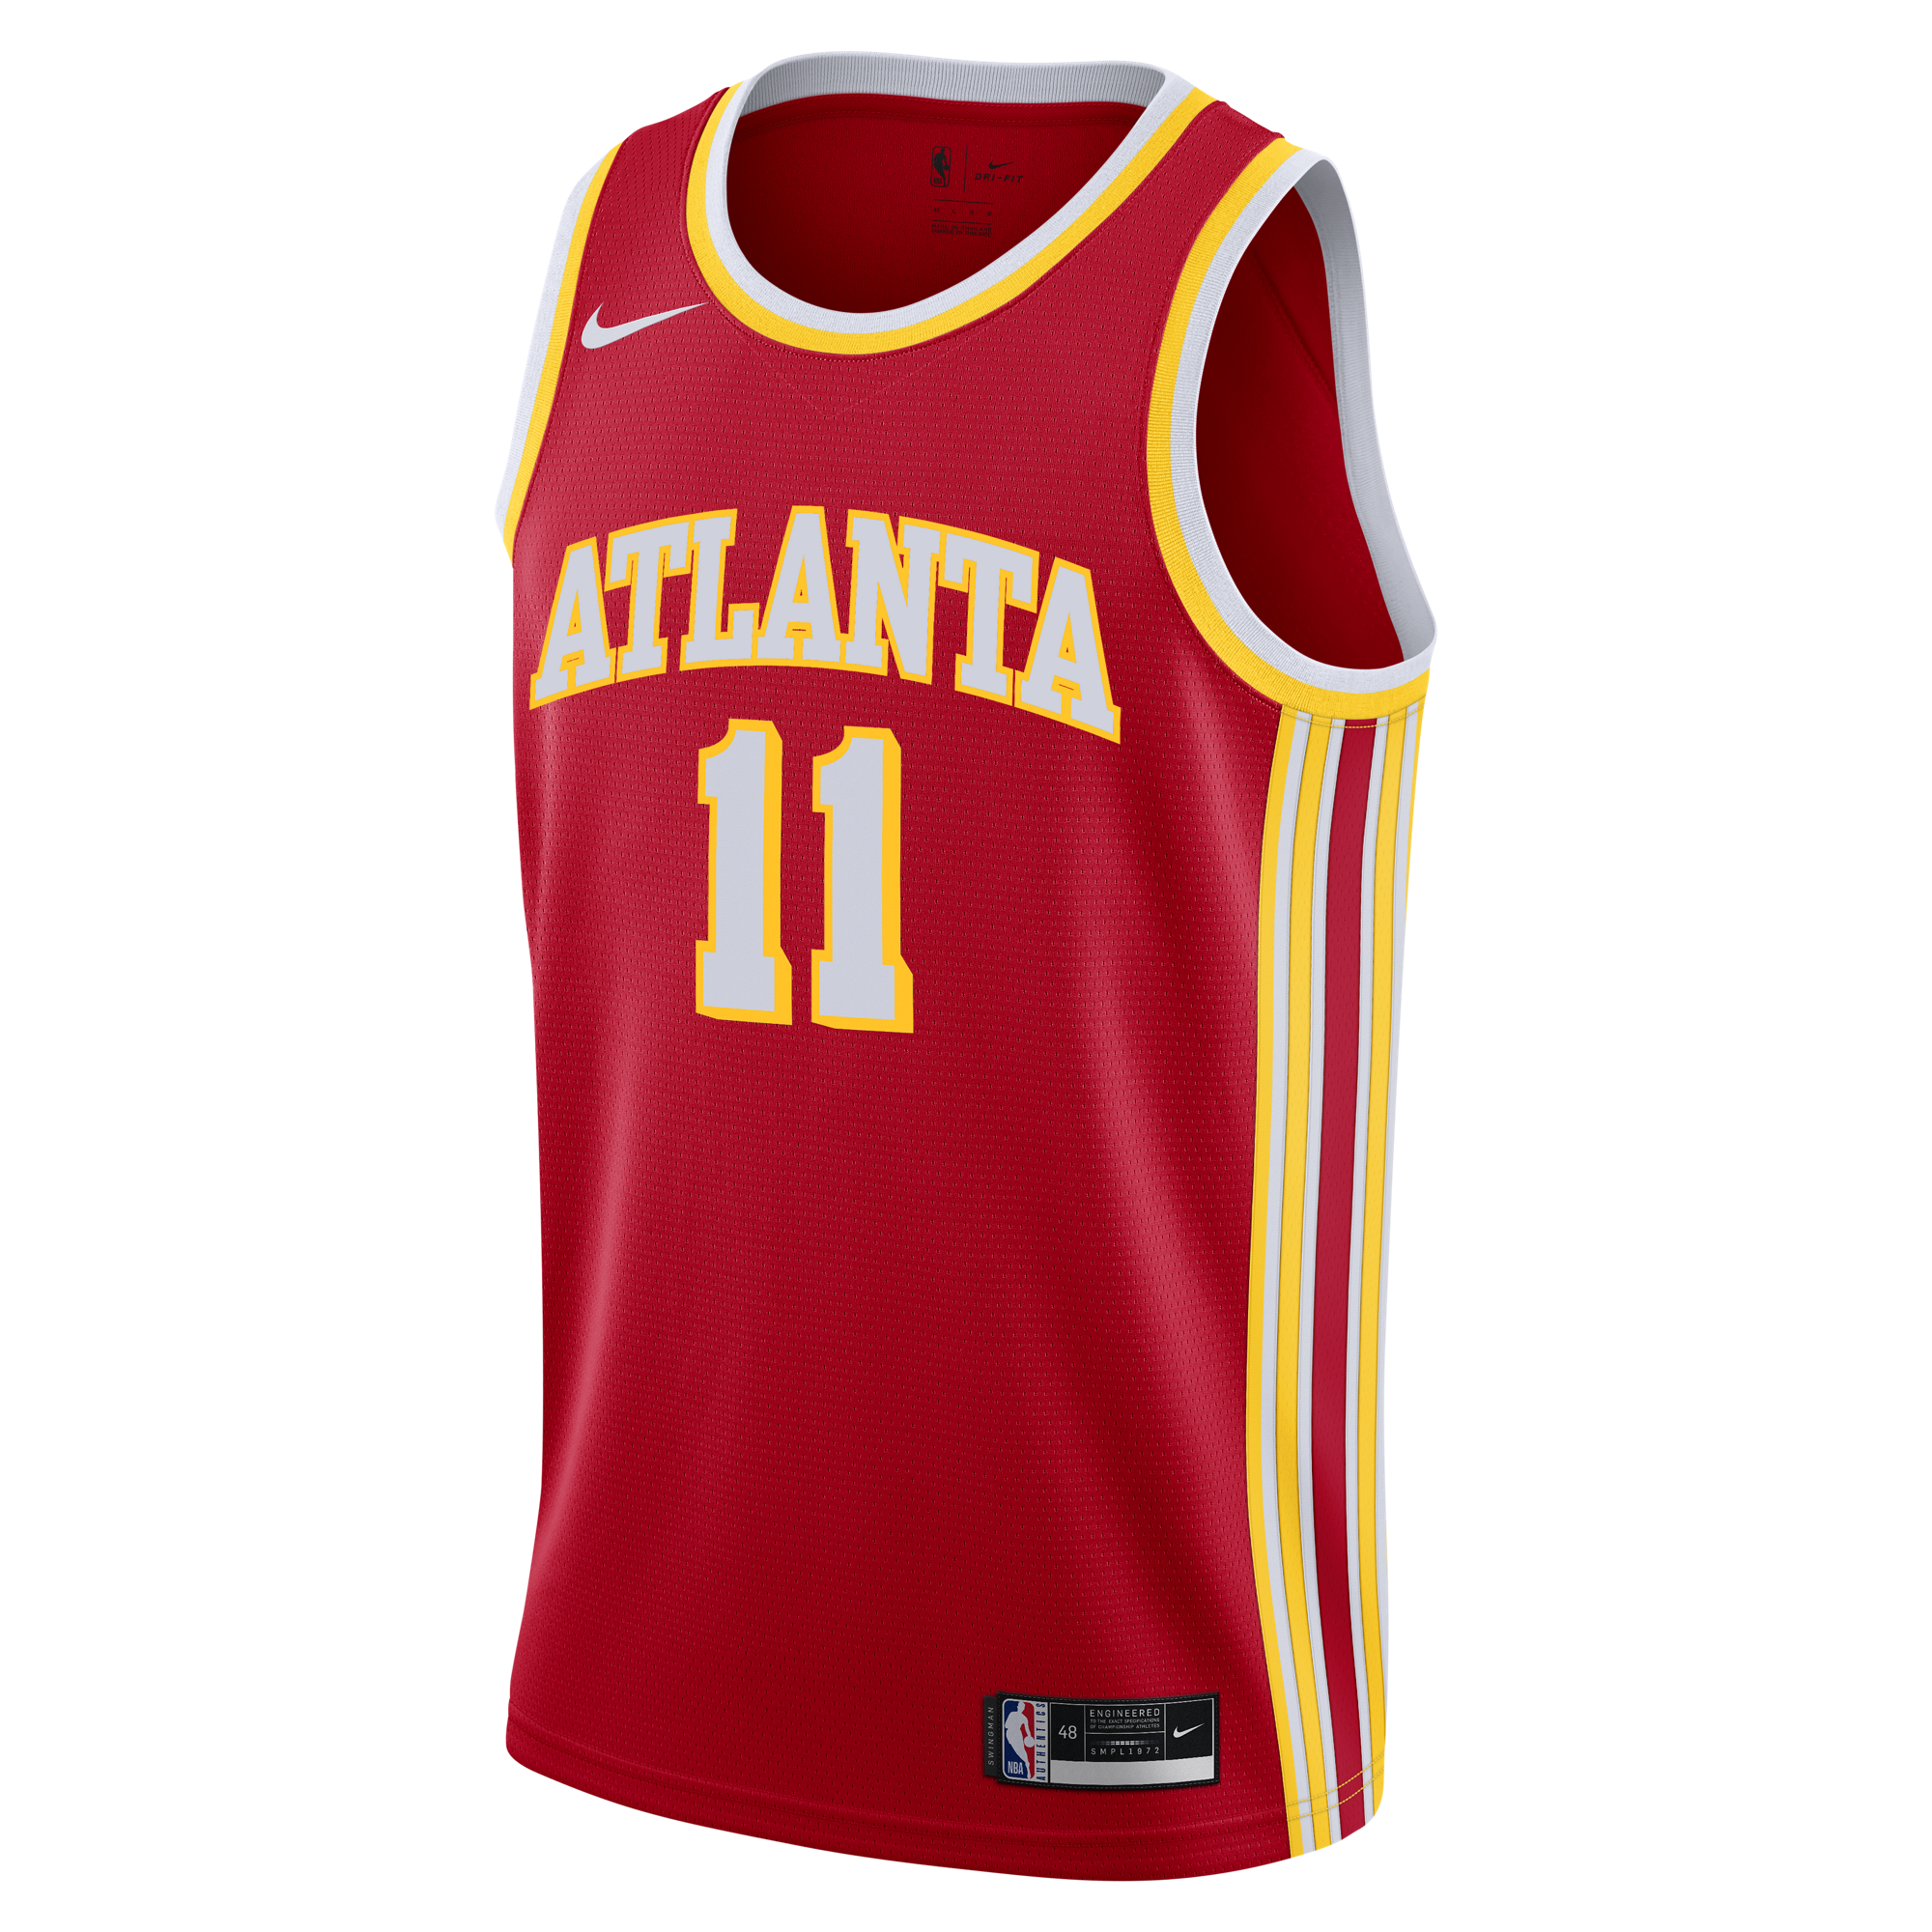 Atlanta HAWKS Nike NBA jersey by SOTO Uniforms Design on Behance